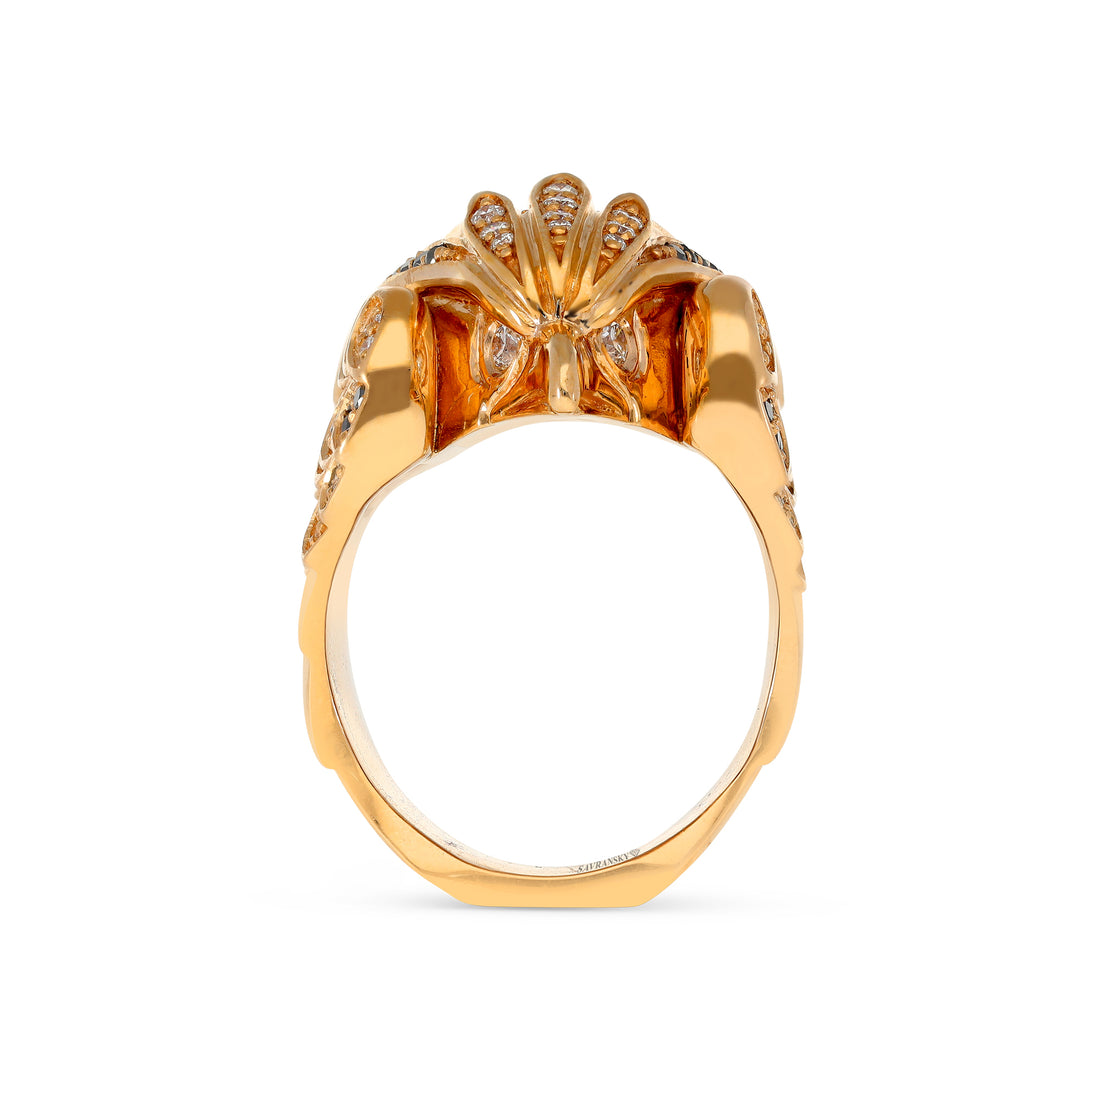 Unique Black Diamond Eagle Ring in 18K Rose Gold